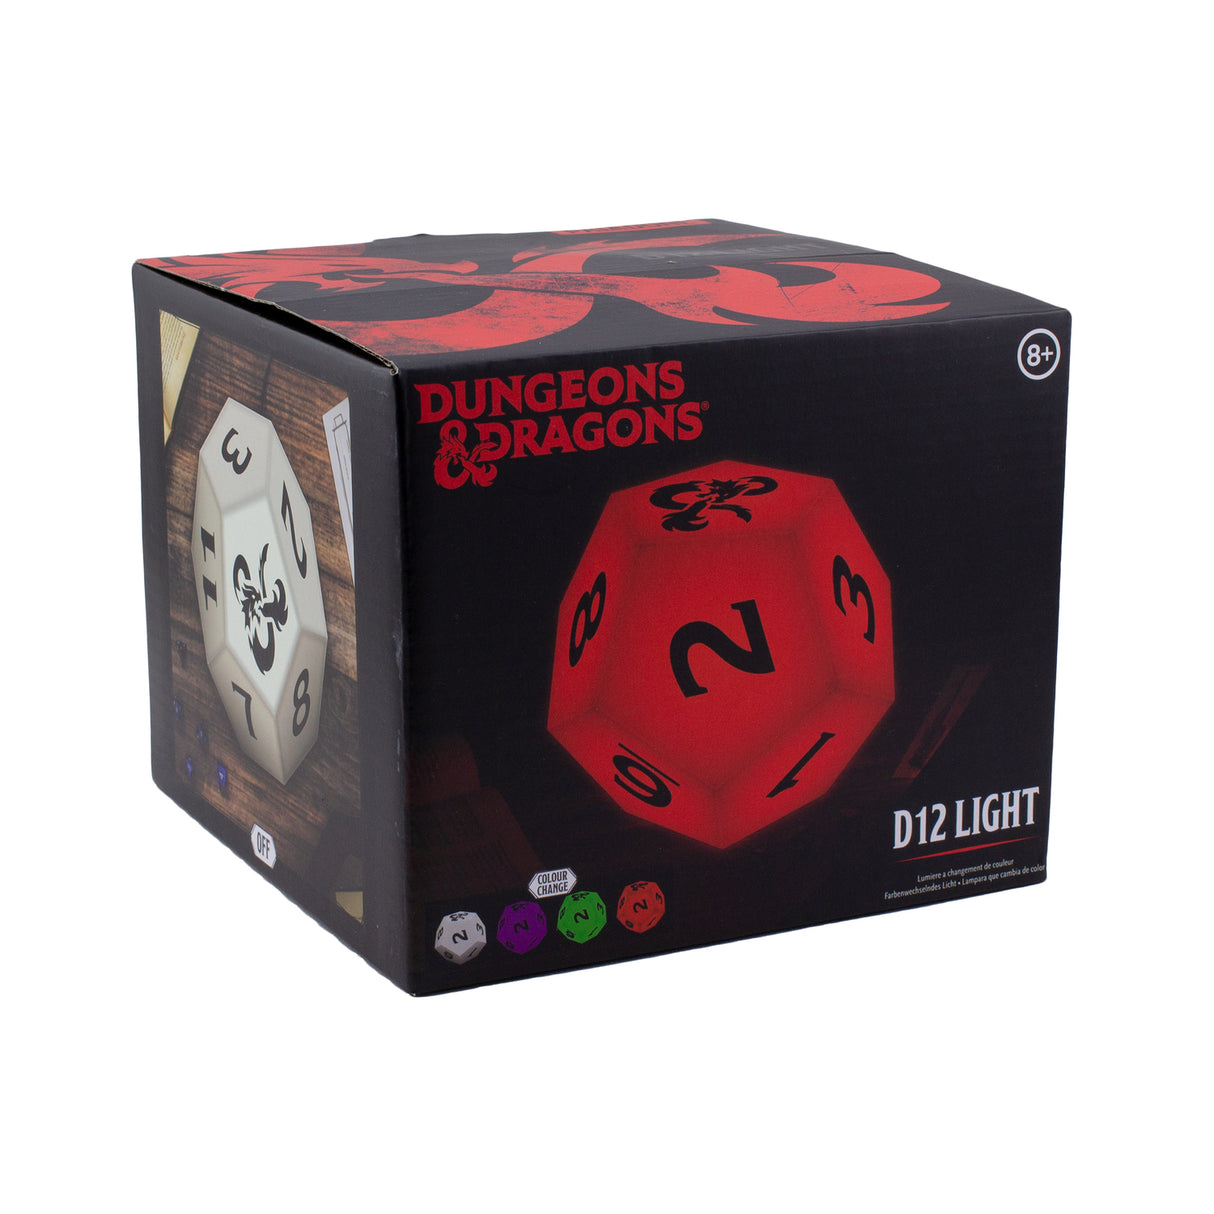 Dungeons and Dragons D12 Dekolampe mit Farbwechsel